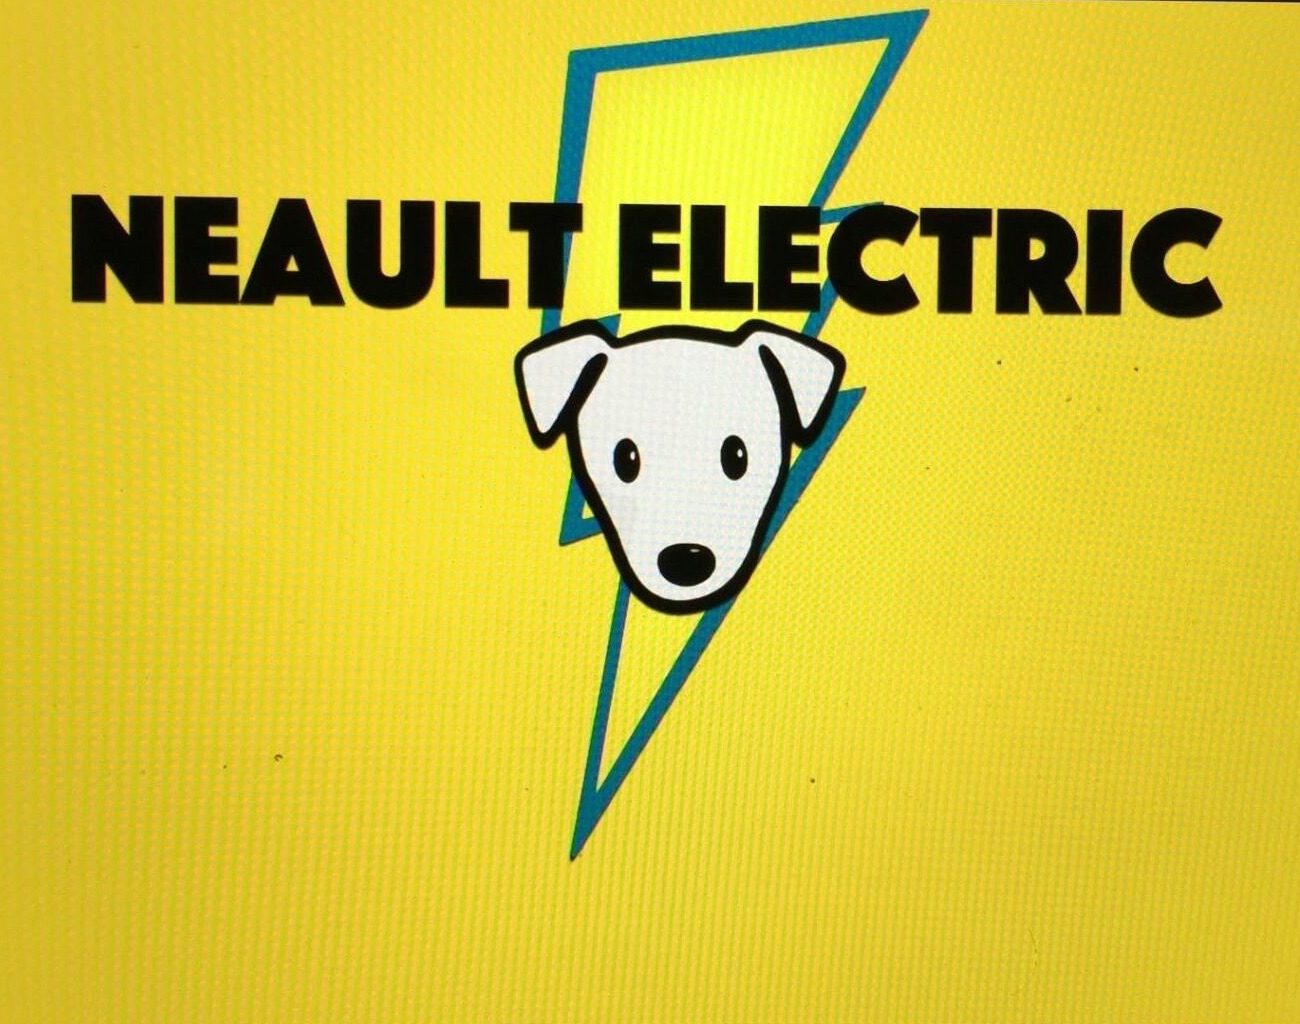 Neault electric logo